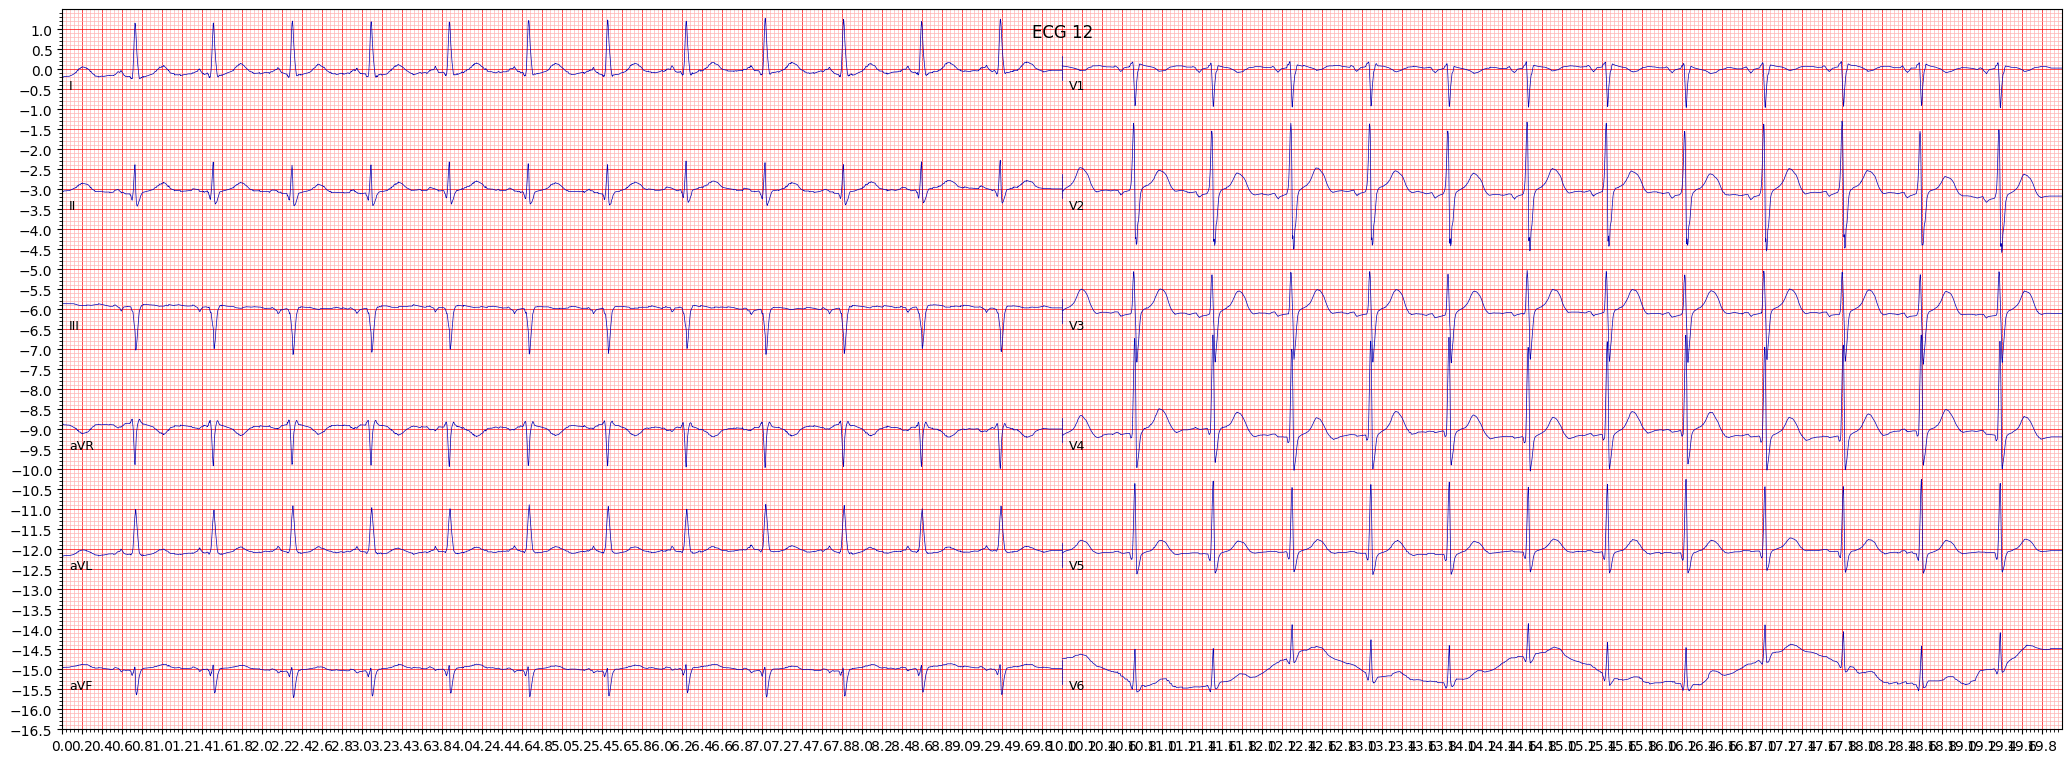 inferolateral myocardial infarction (ILMI) example 4937